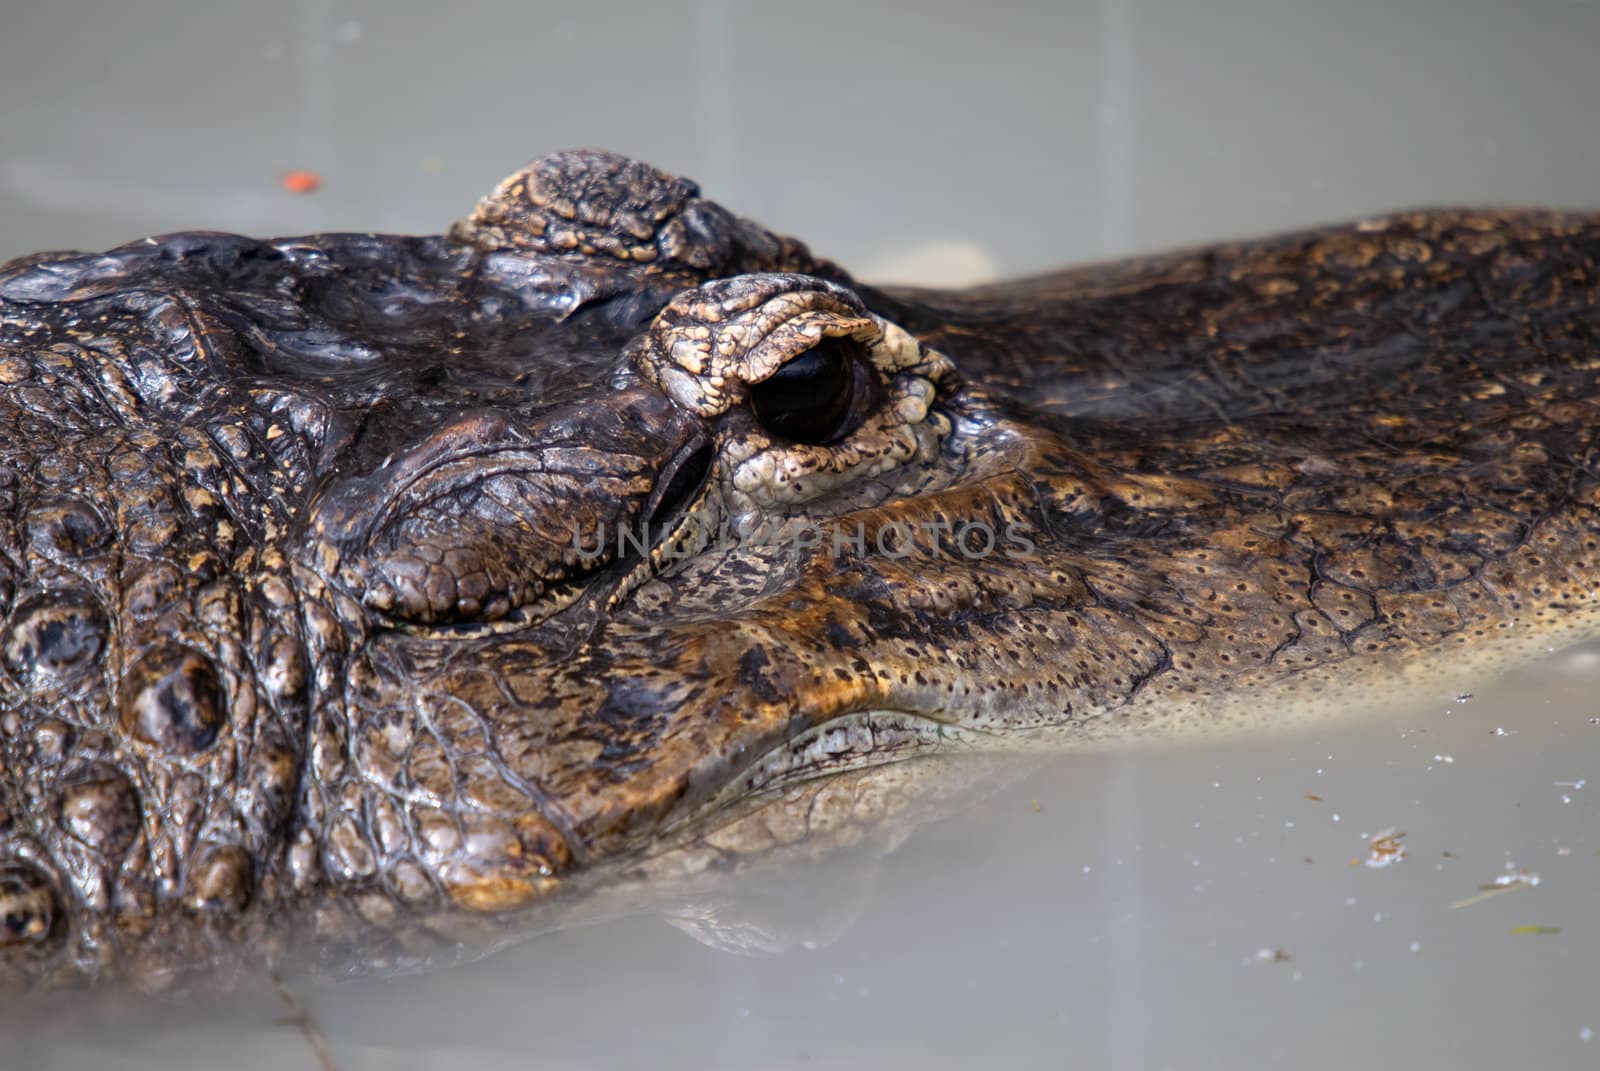 Close-up picture of a crocodile head